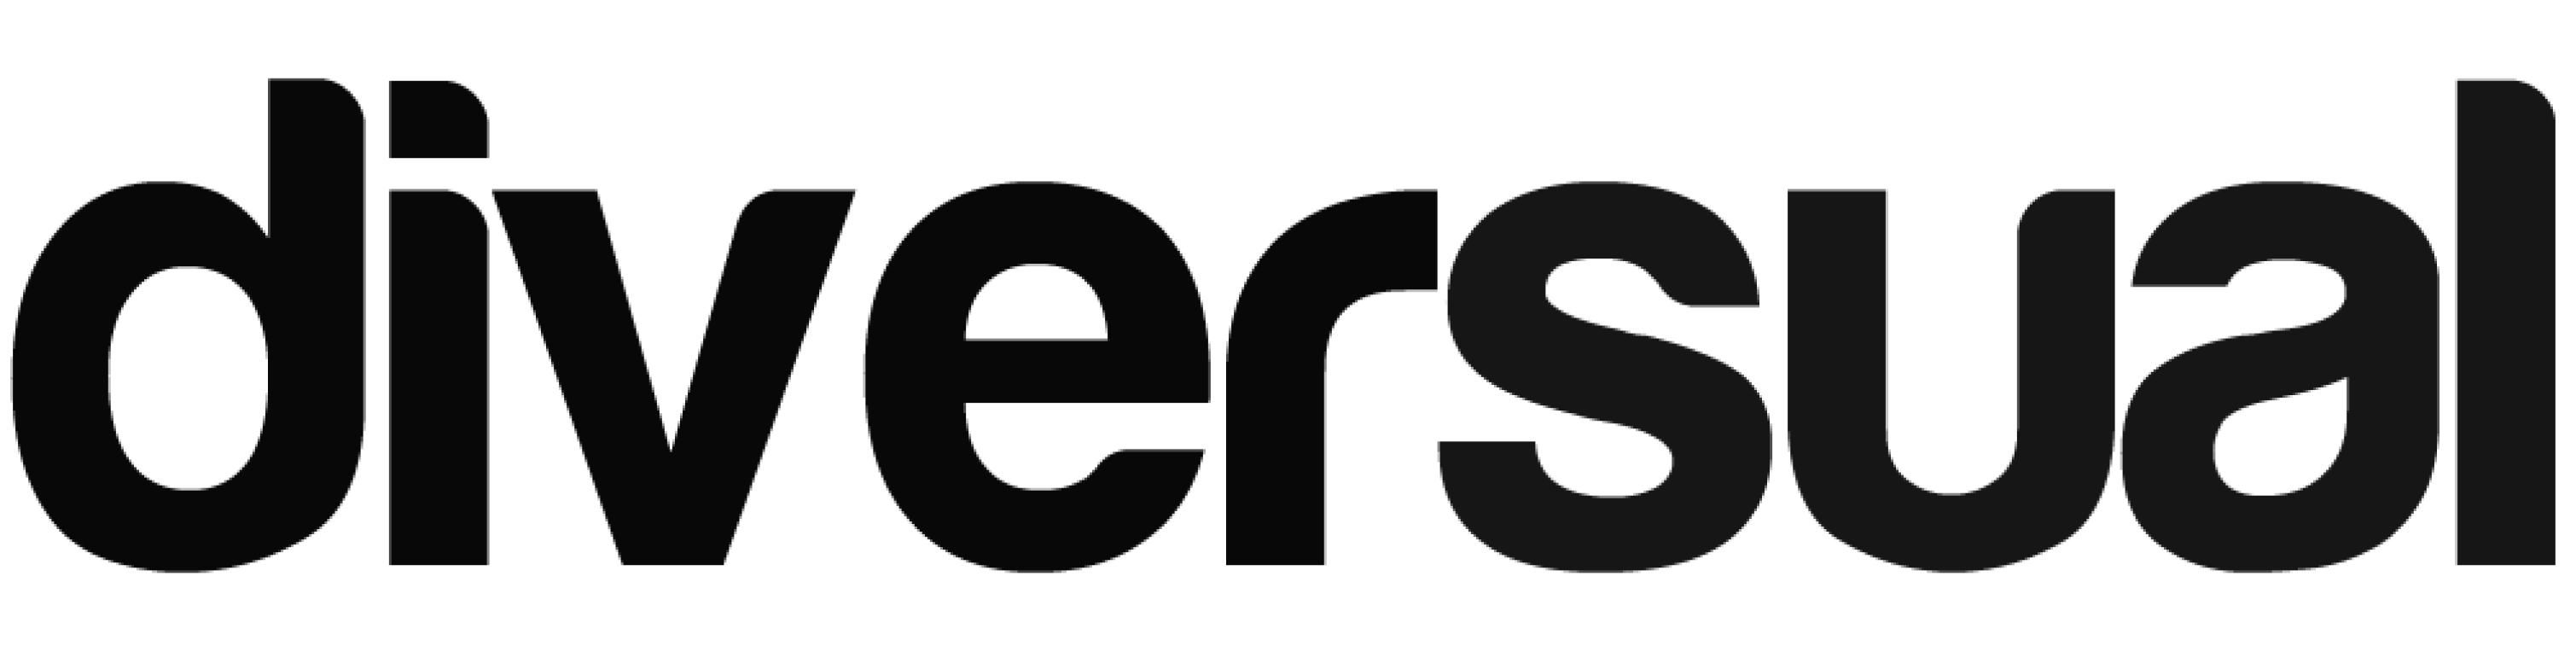 Logo Diversual